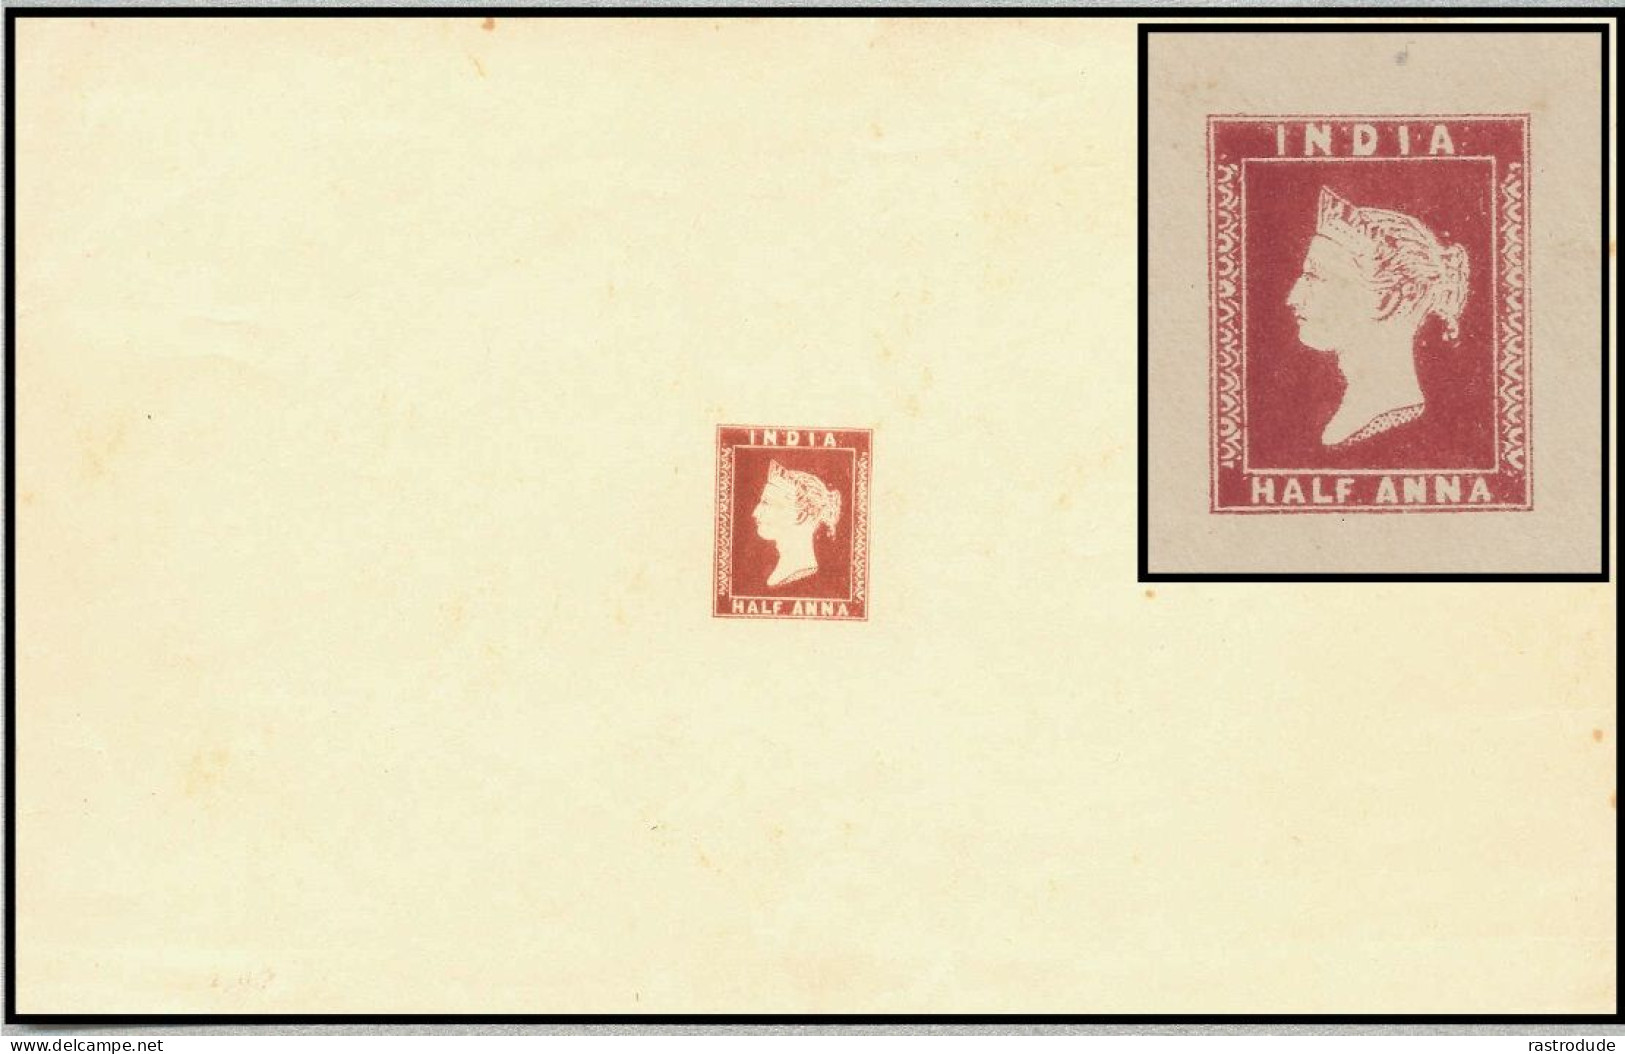 INDIA 1854 ½ A CAPT. THULLIER LITH. ESSAY SHEETLET, SPENCE Nº.68 172mm X 108mm - 1854 Compañia Británica De Las Indias